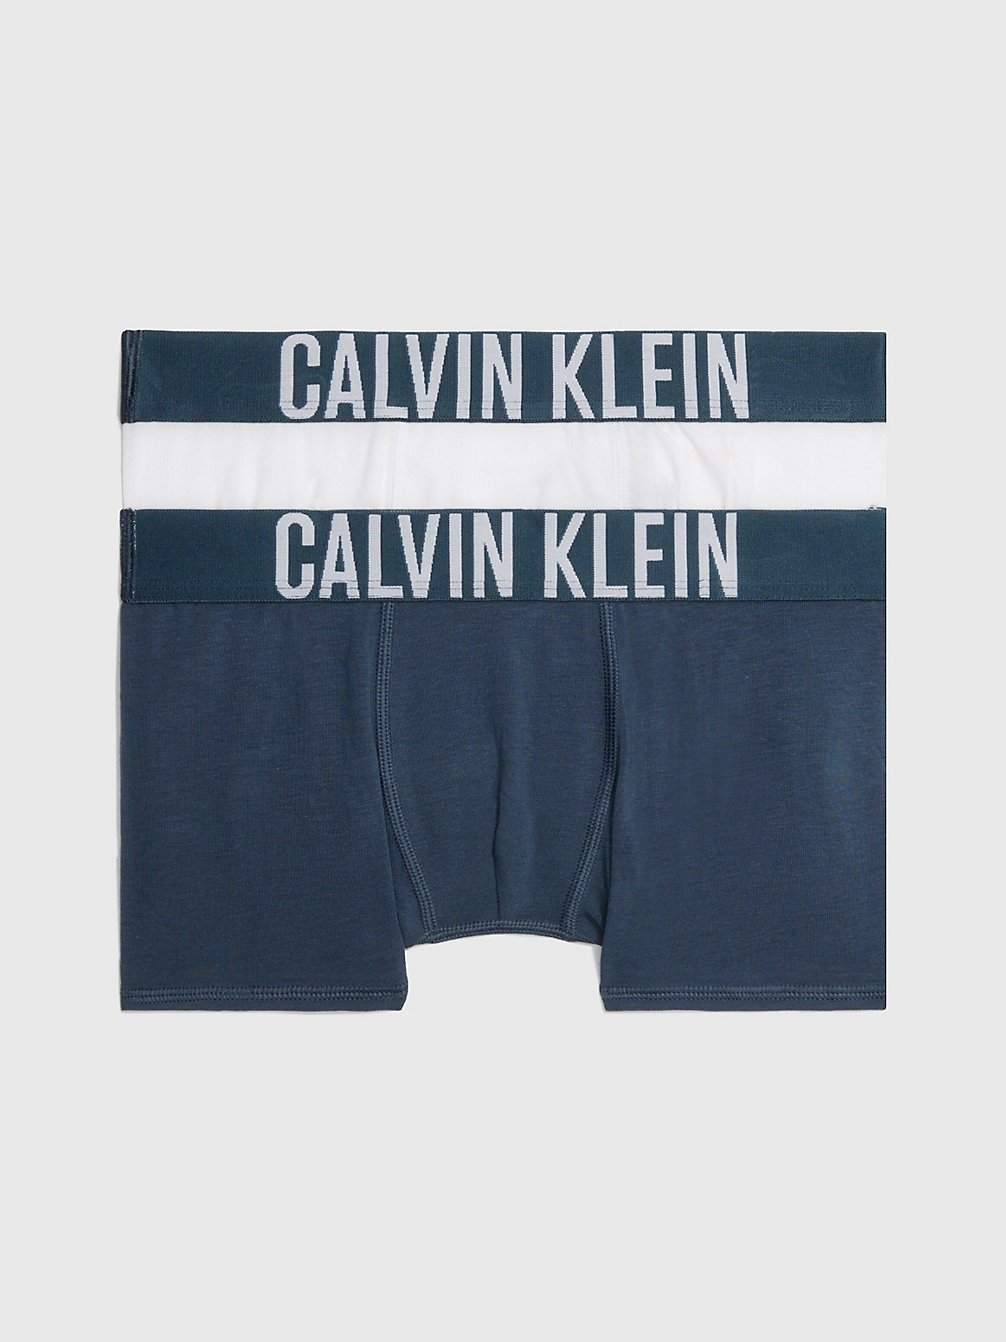 BLUENOMAD/PVHWHITE Lot De 2 Boxers Pour Garçon - Intense Power undefined garcons Calvin Klein